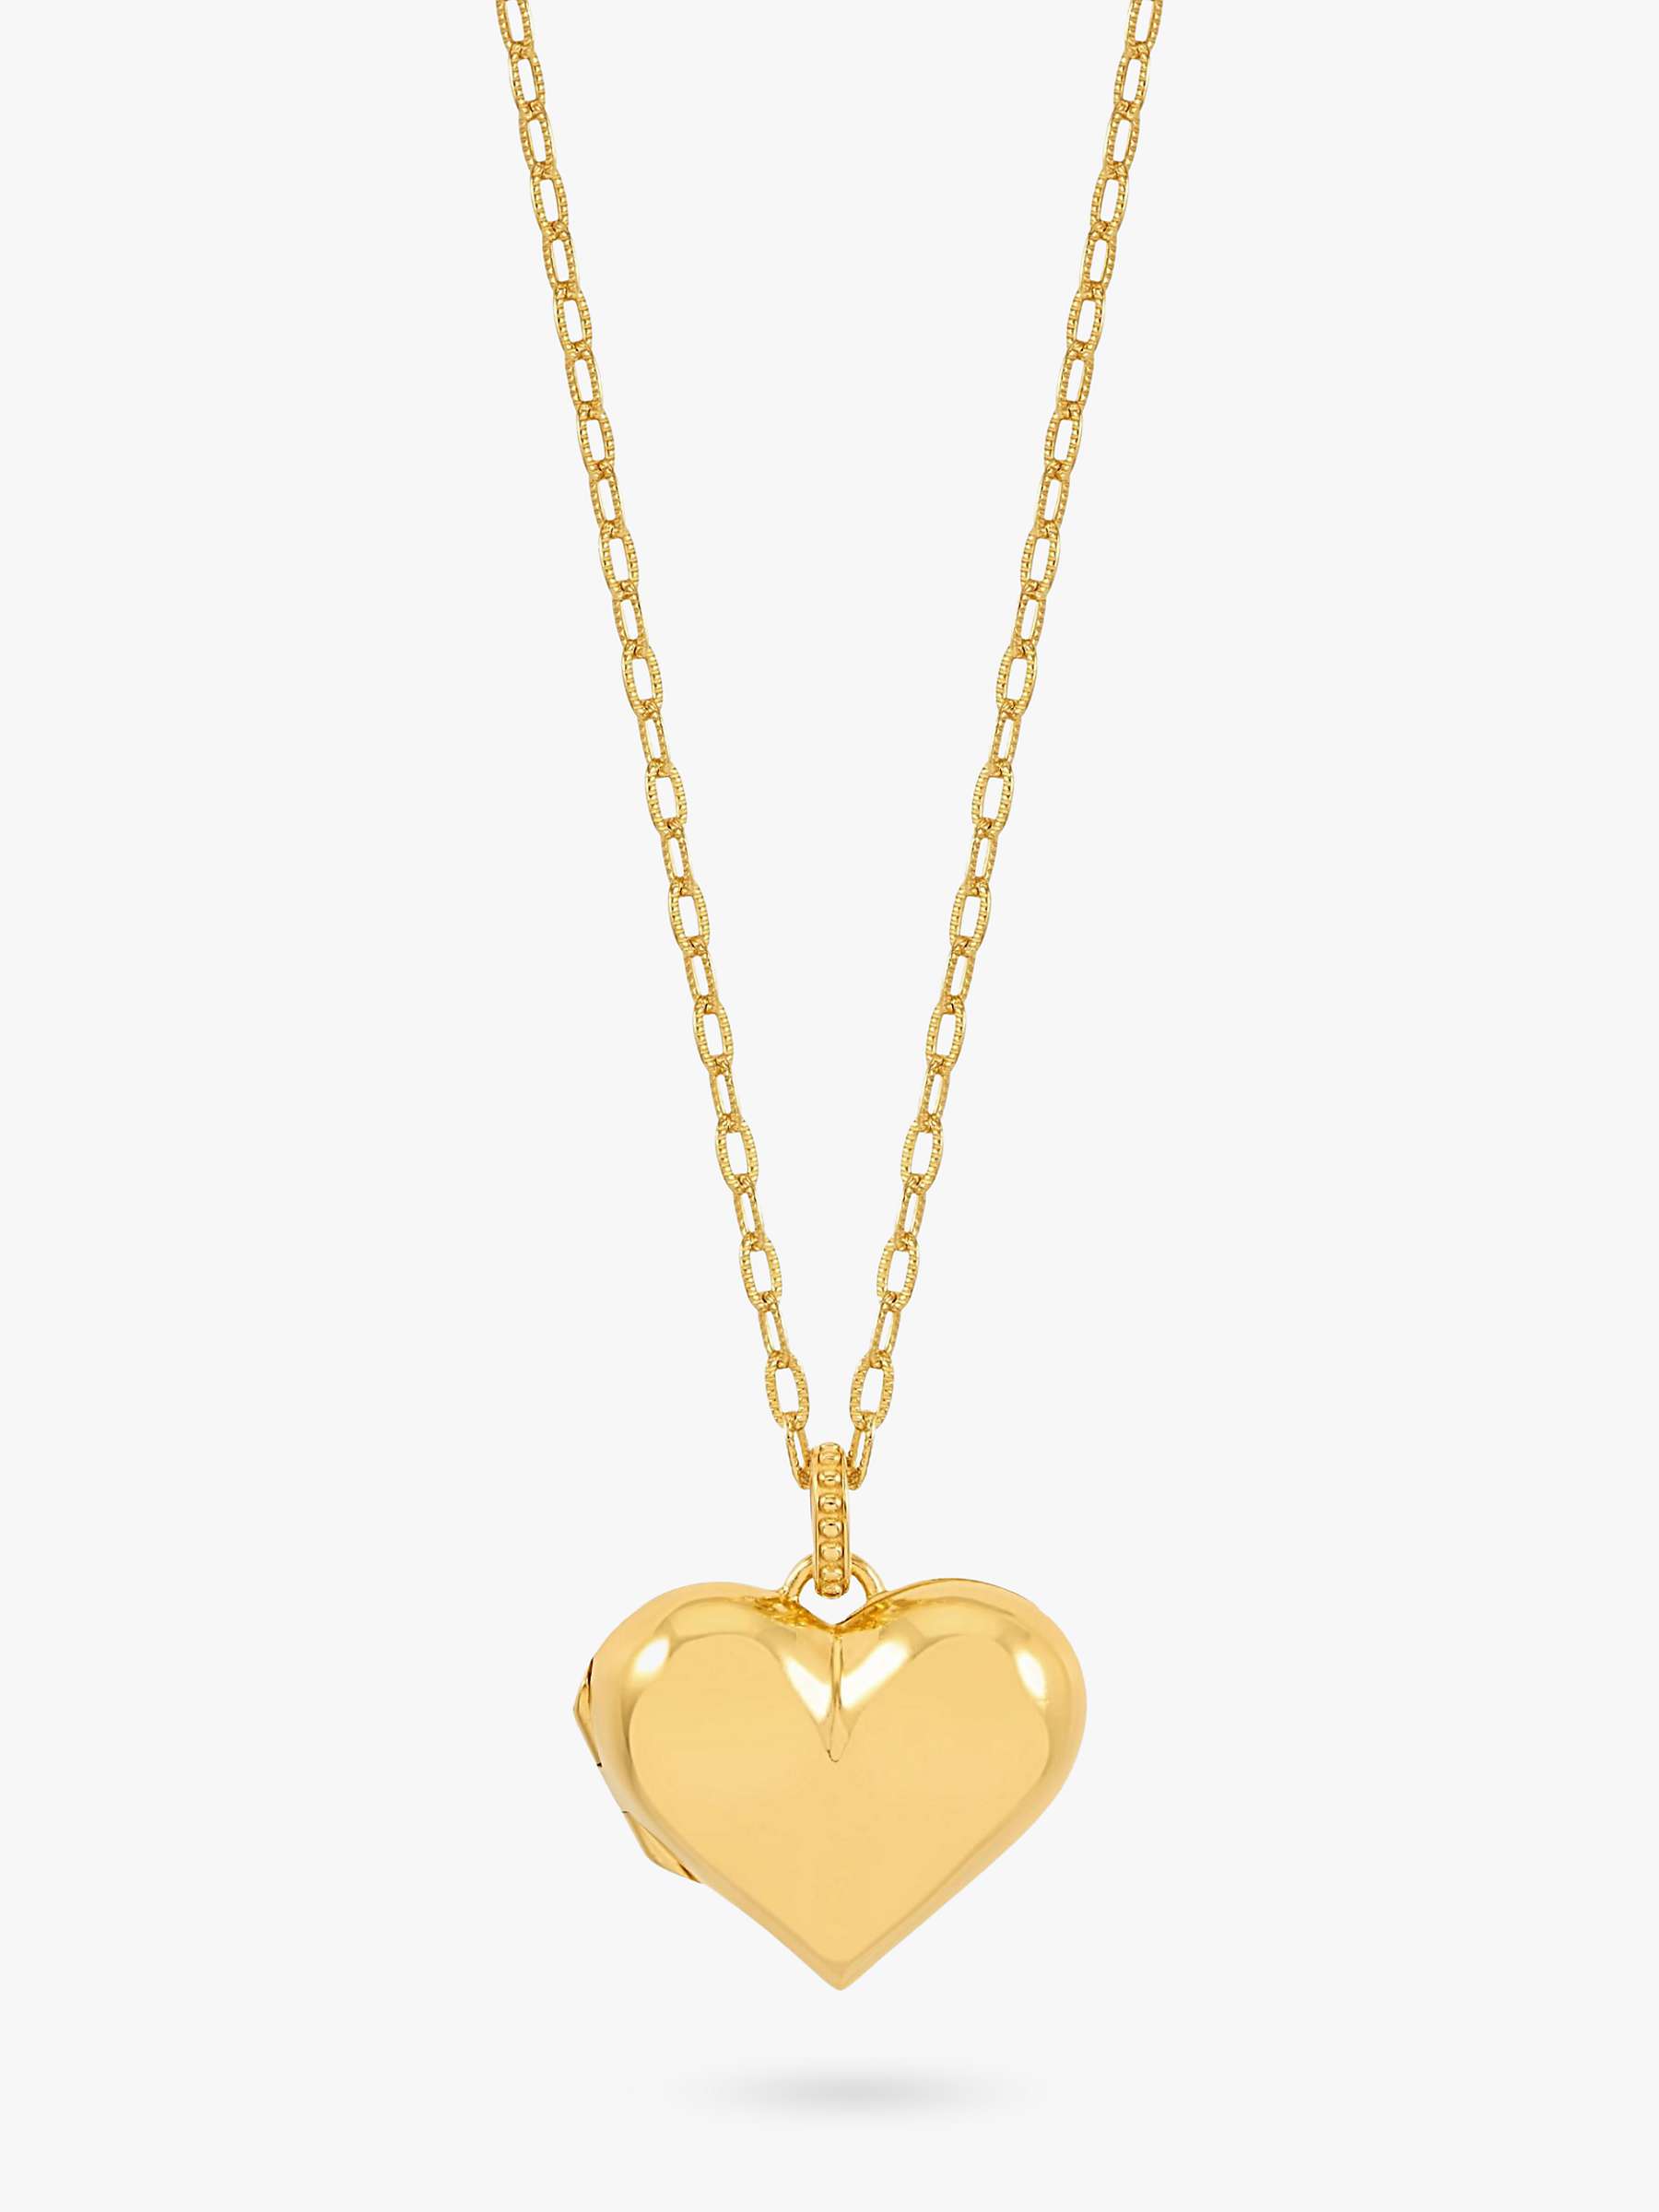 Buy Dower & Hall Treasured Heart Locket on Millie-Grain Textured Chain Online at johnlewis.com